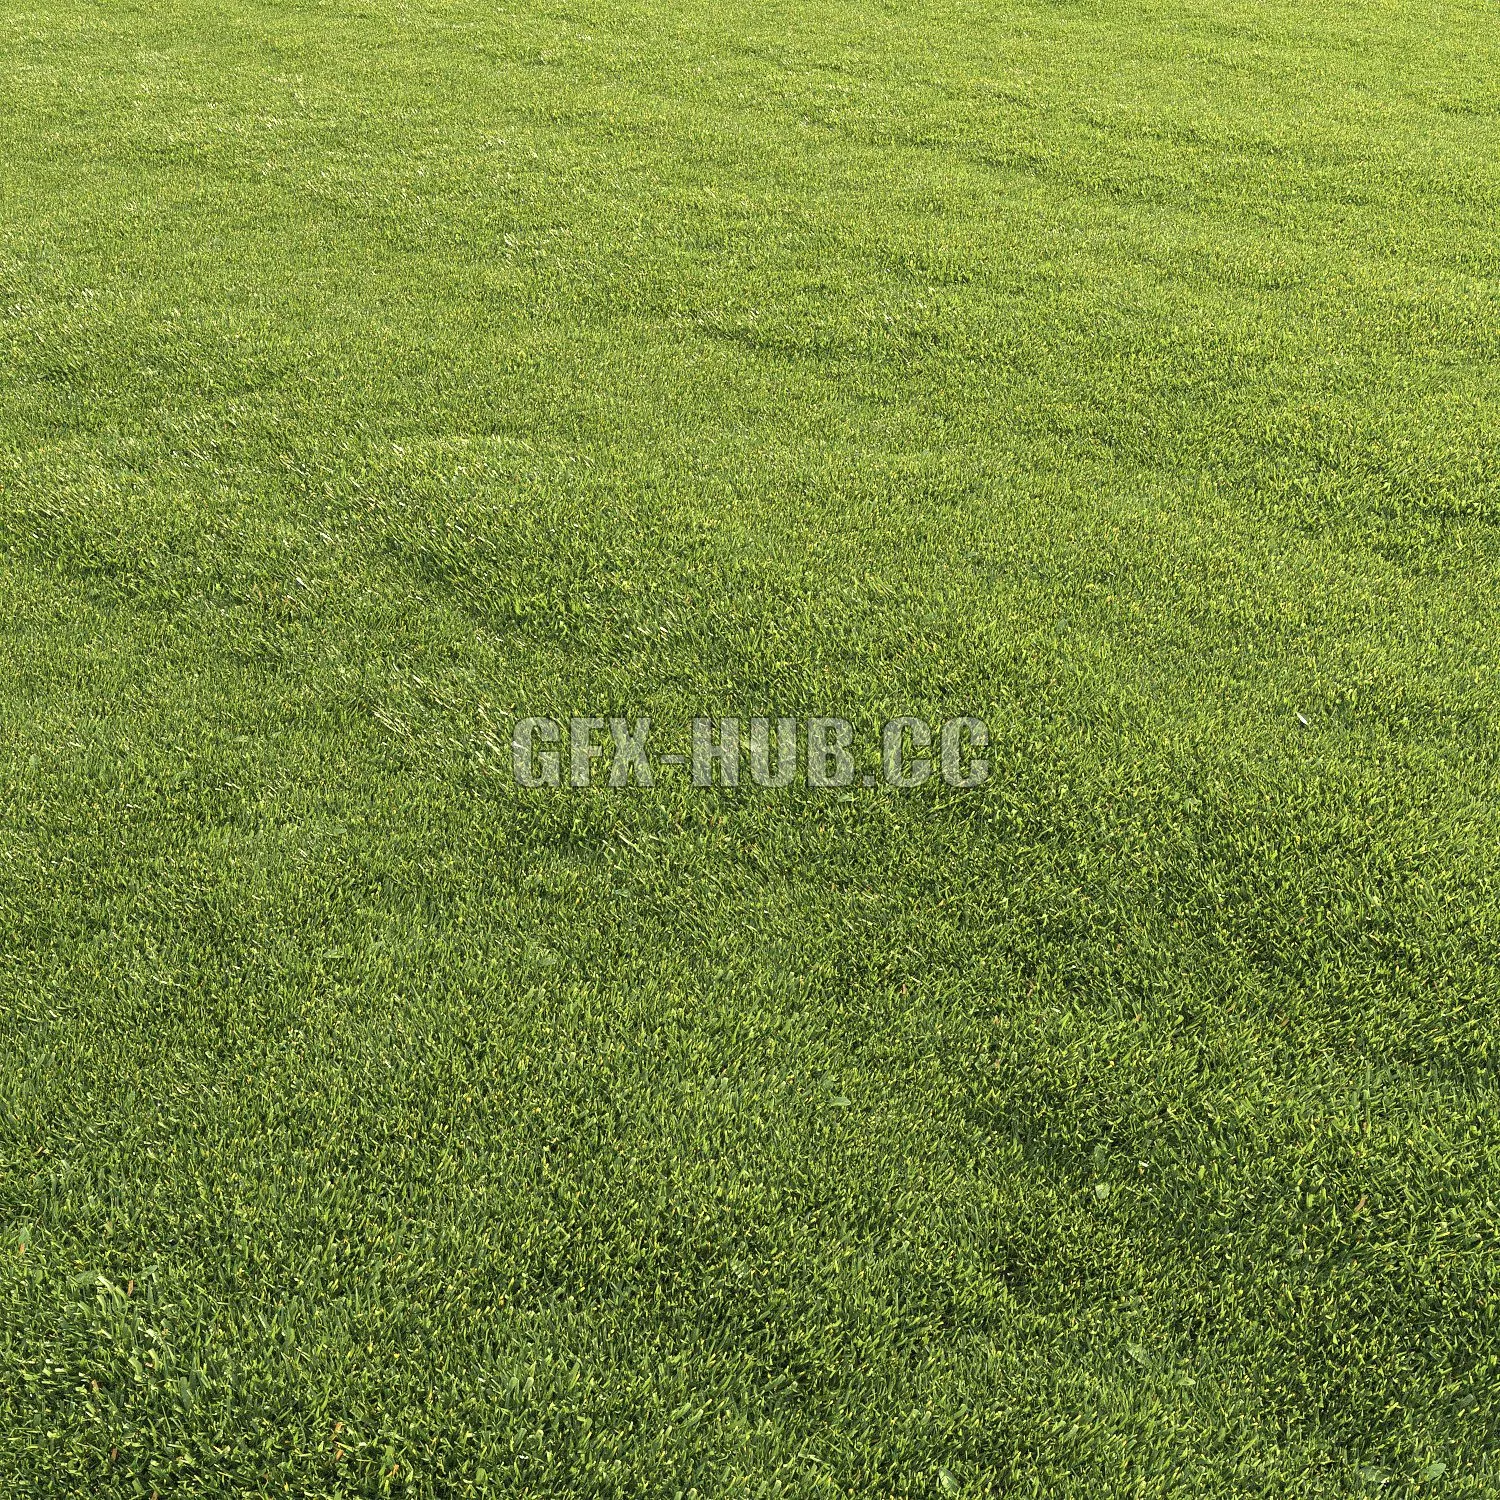 FURNITURE 3D MODELS – Lawn Grass 1